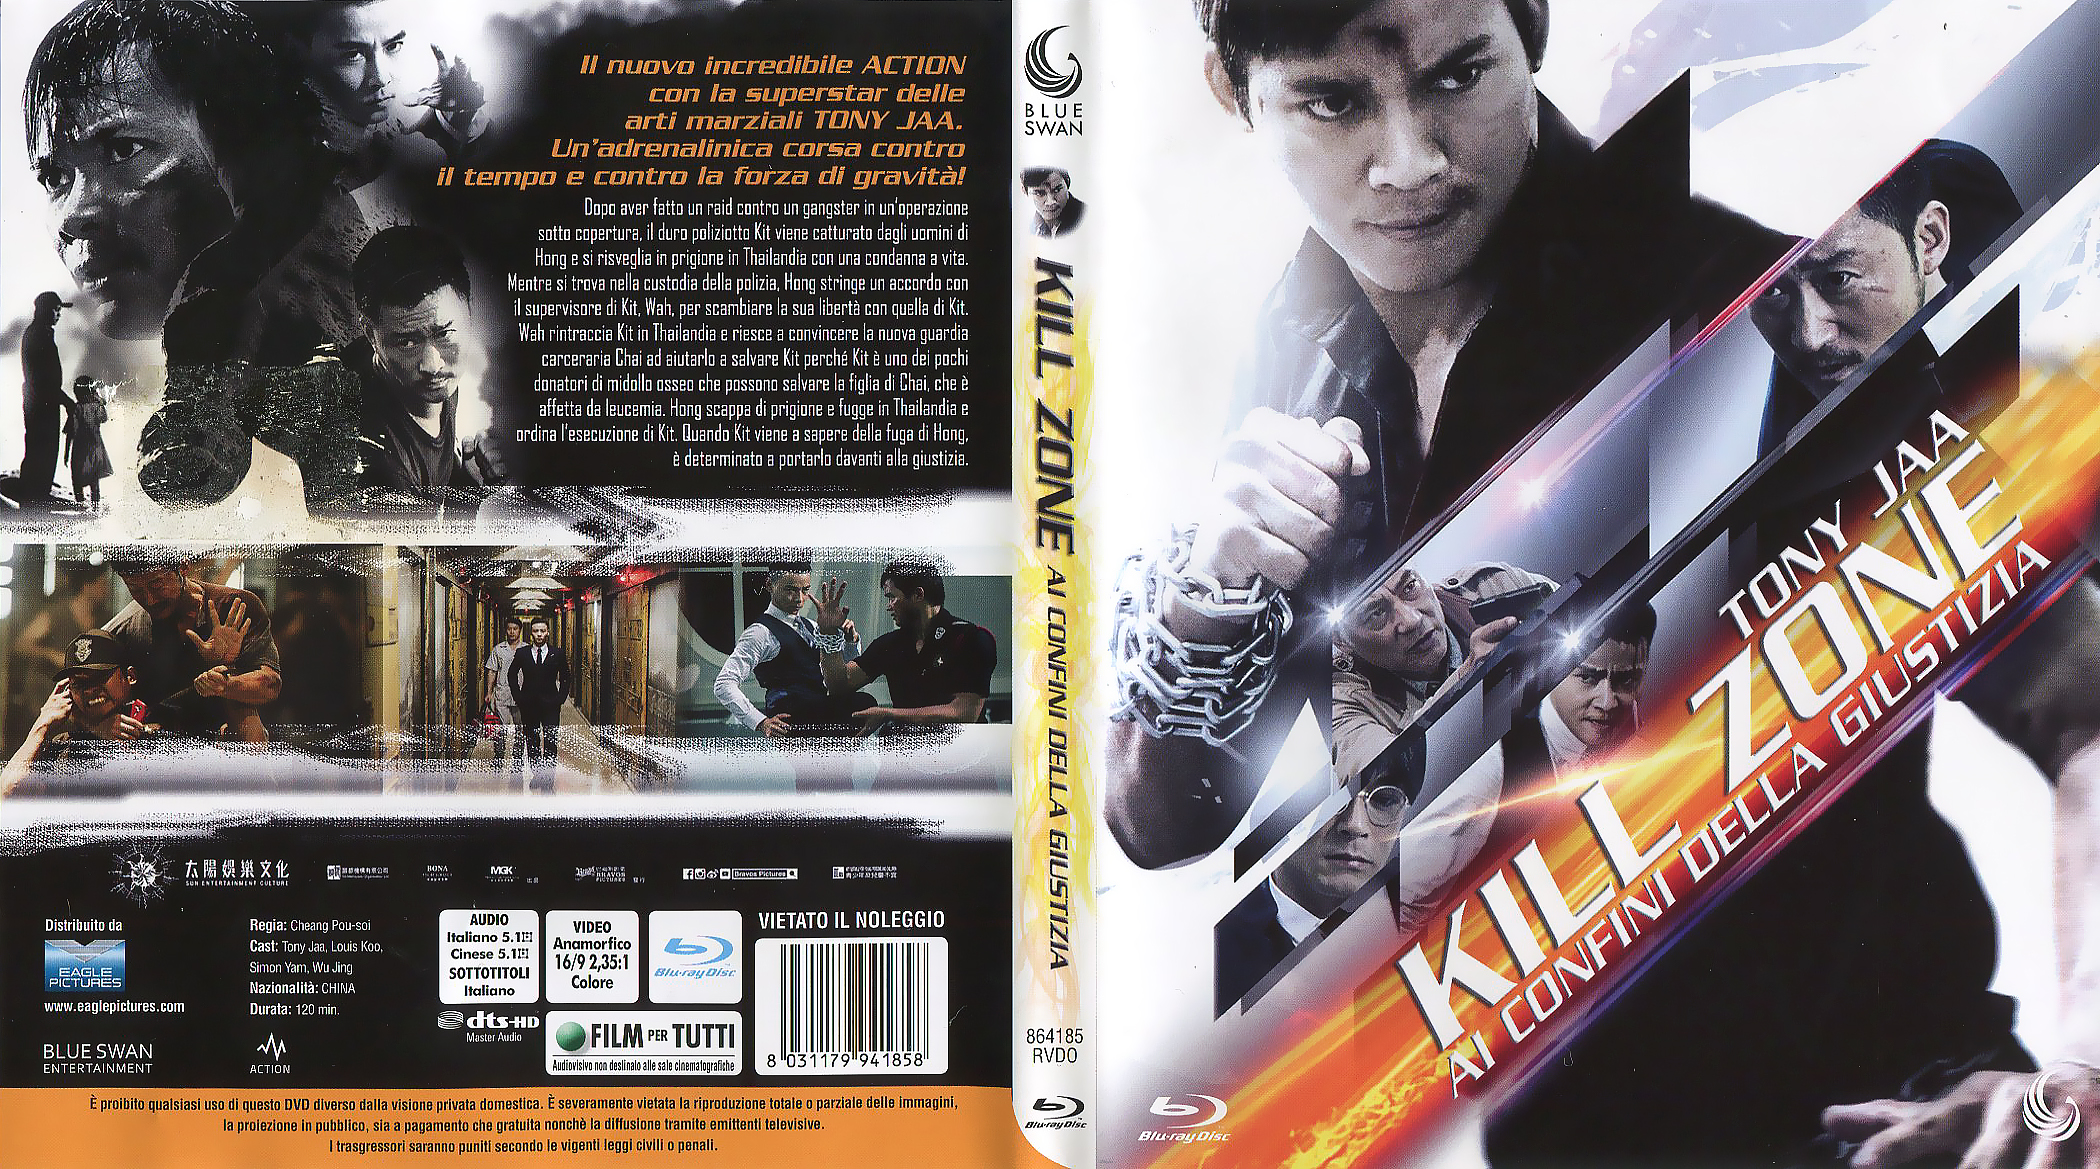 Kill Zone 2, Official Movie Site